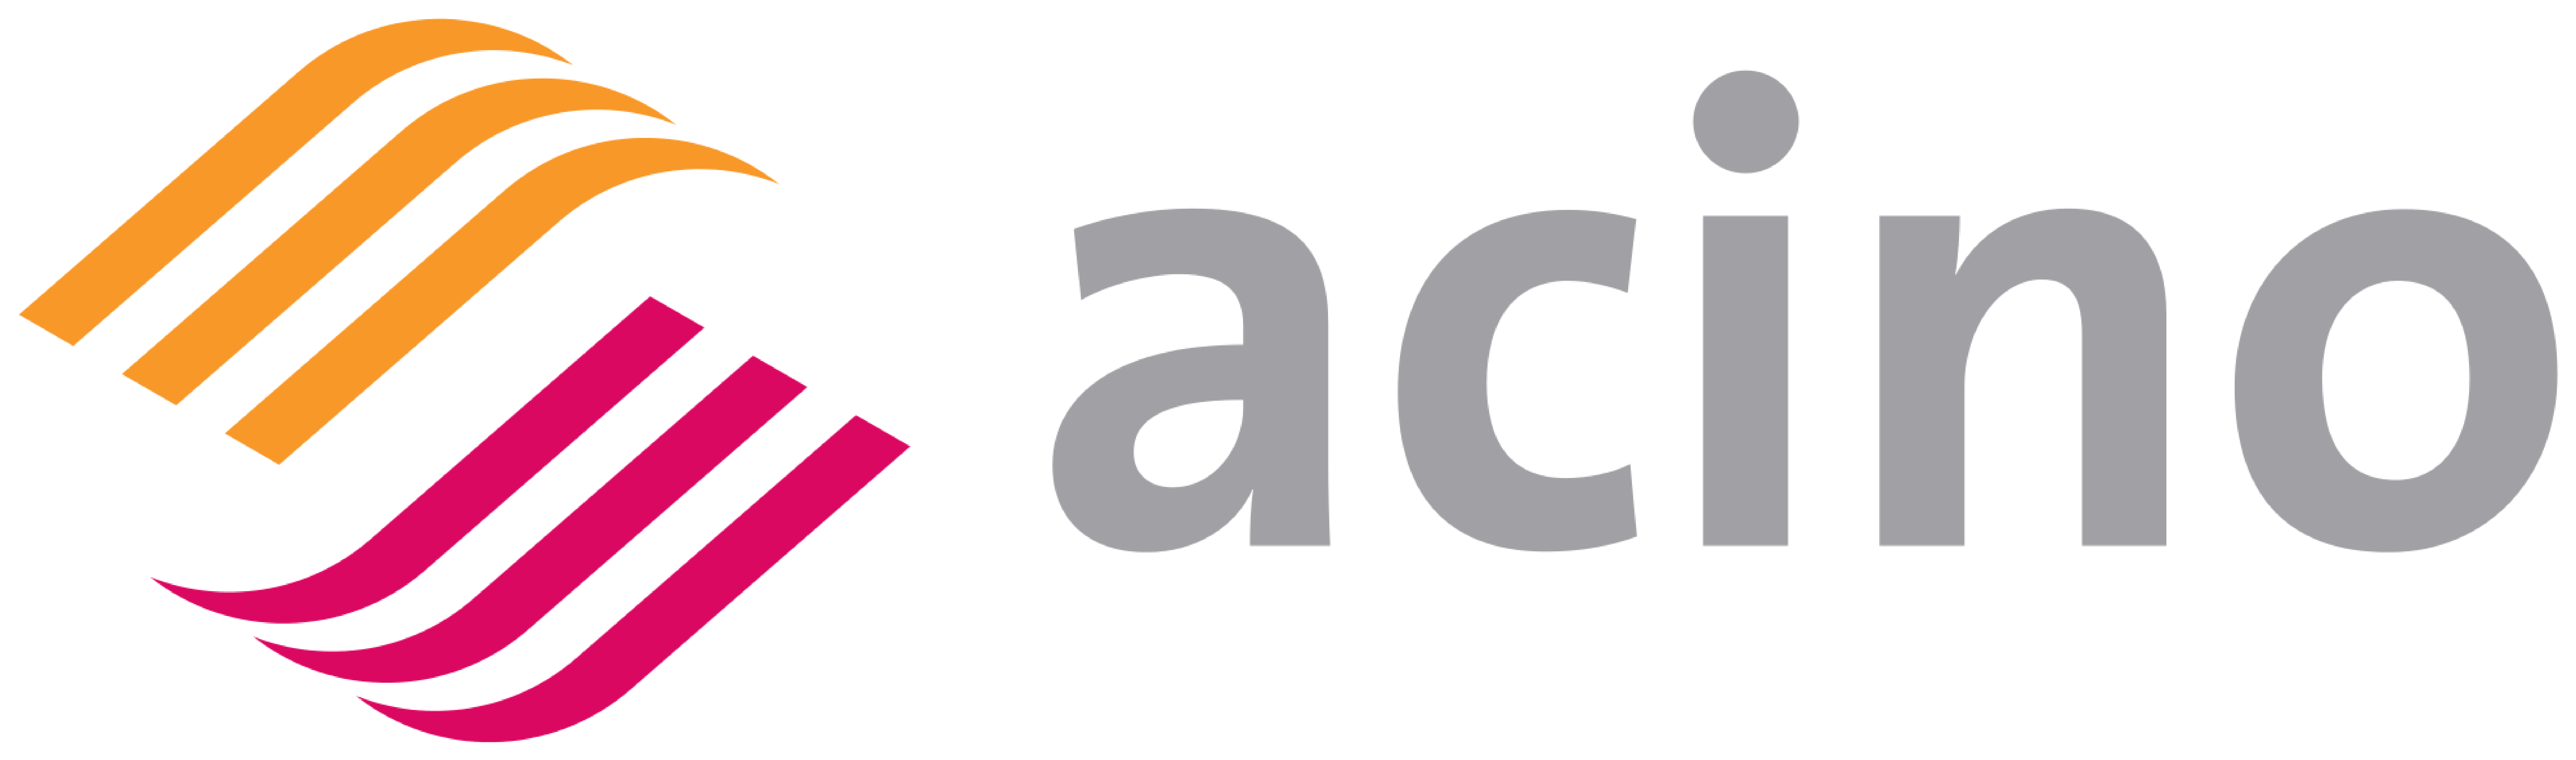 Acino International AG